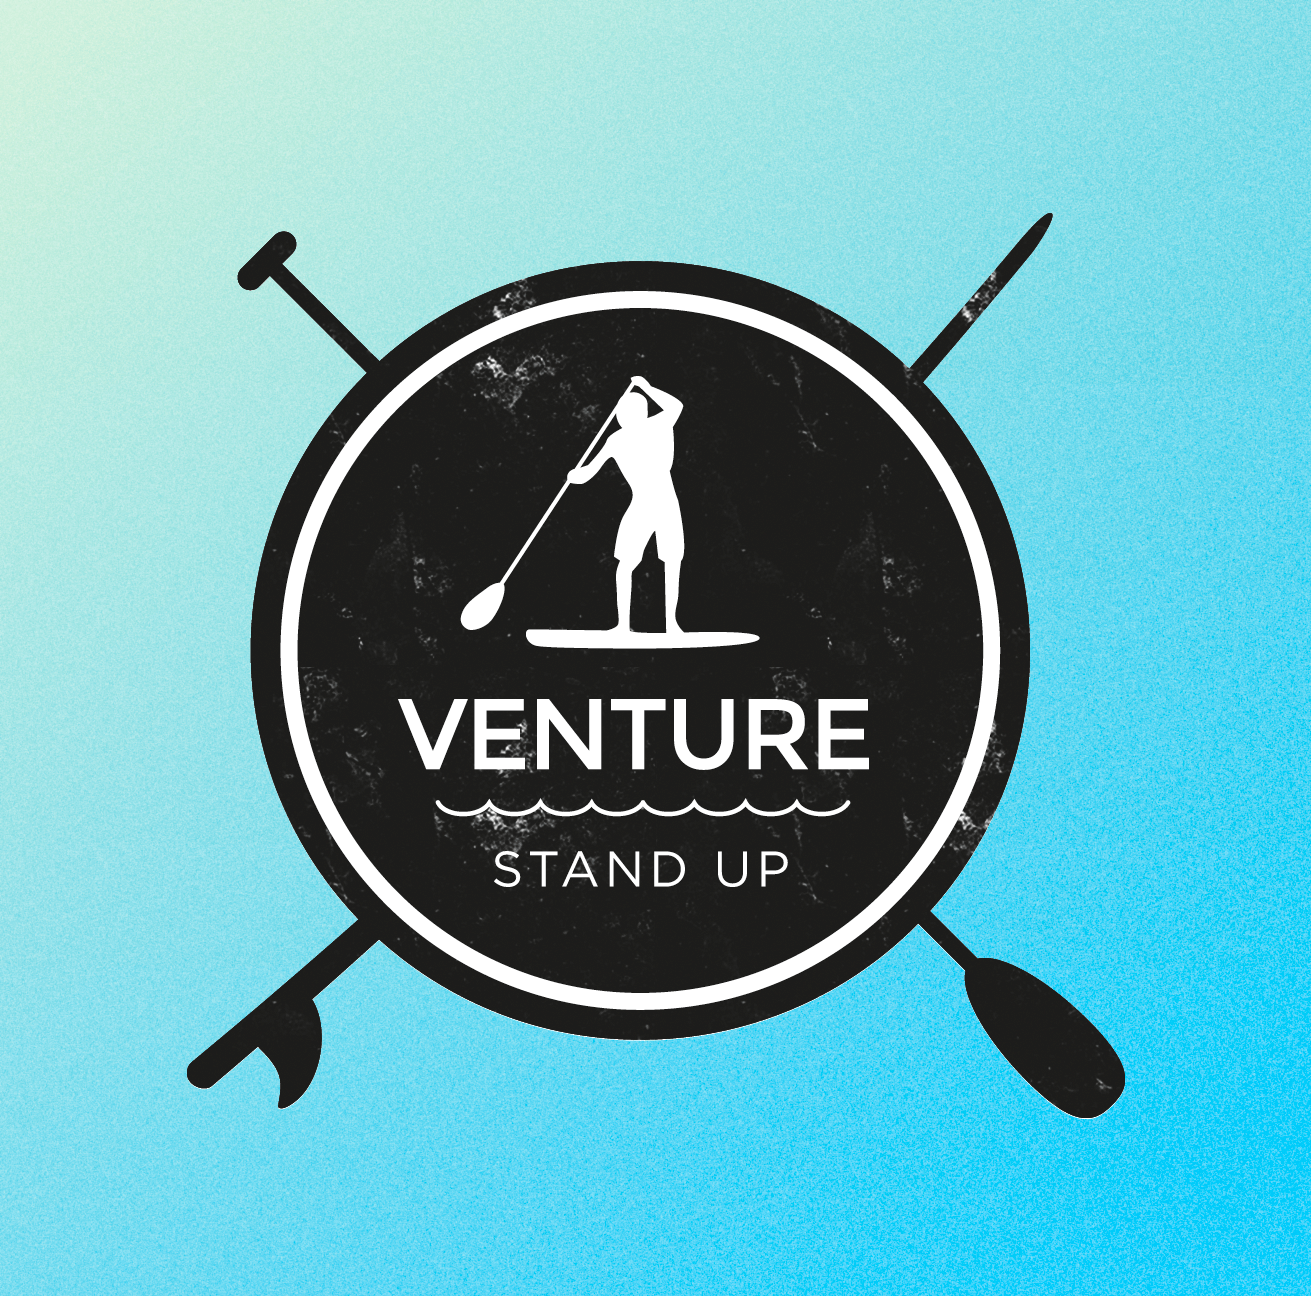 Paddleboard Logo - venture stand up paddle board logo www.venturestandup.co.nz | Paddle ...